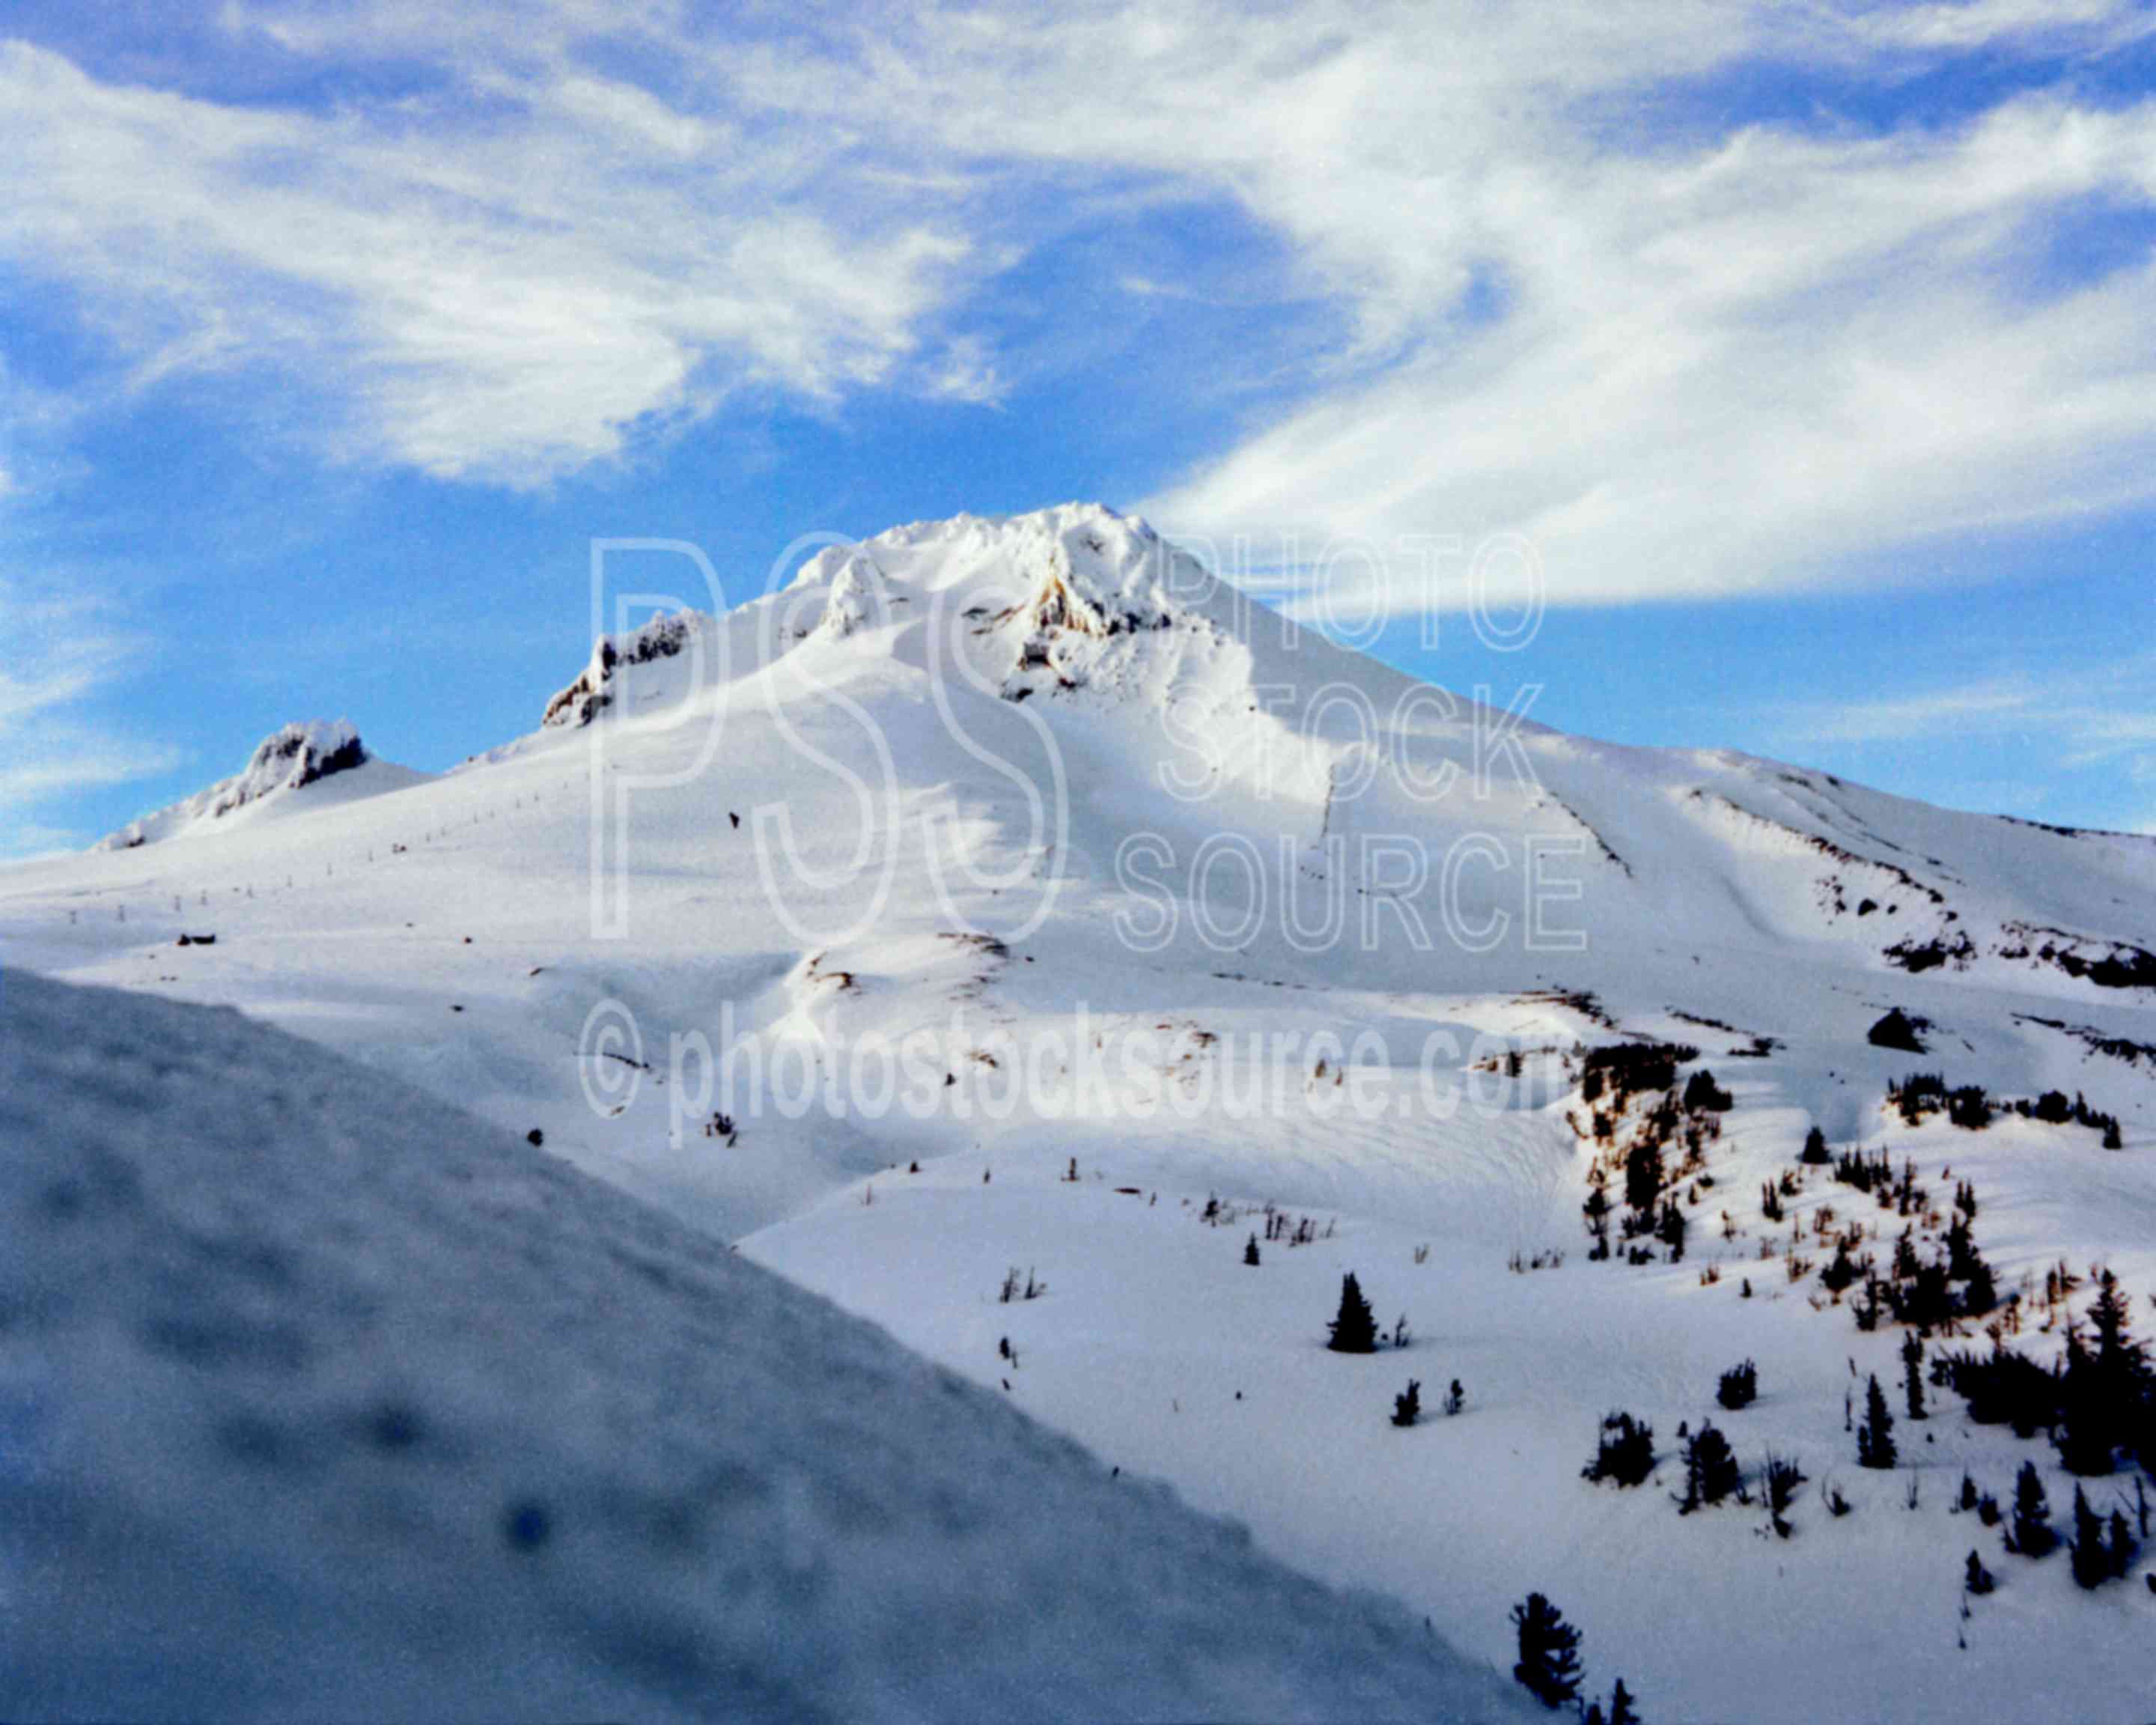 Mt. Hood in Winter,mt. hood,snow,timberline lodge,winter,mount,season,usas,mountains